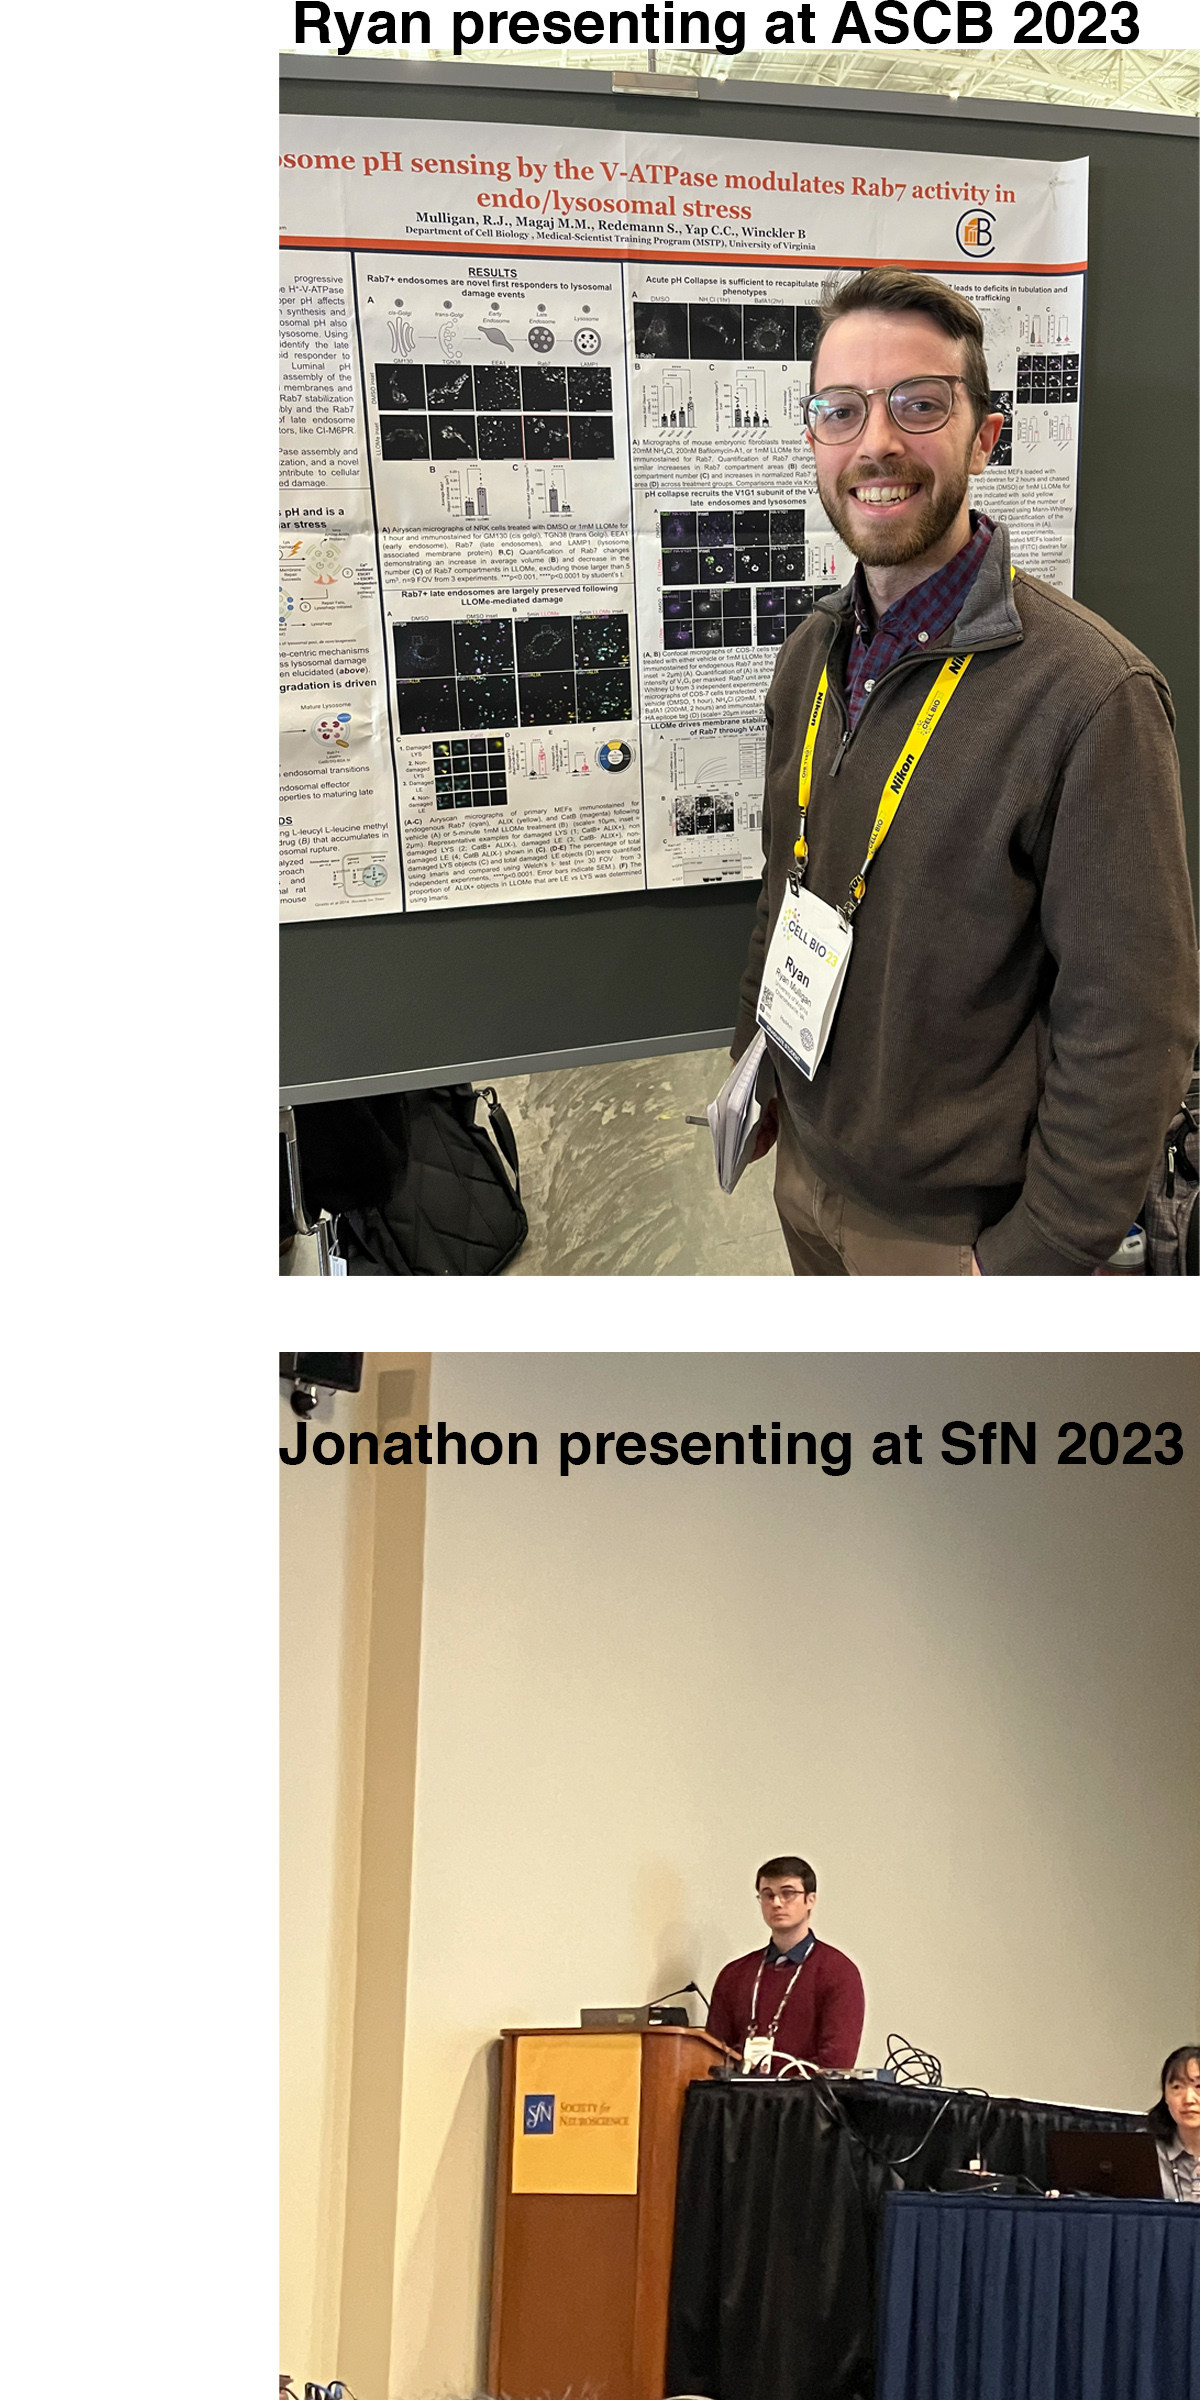 Winckler lab presenters at SfN and ASCB: Ryan and Jonathon.